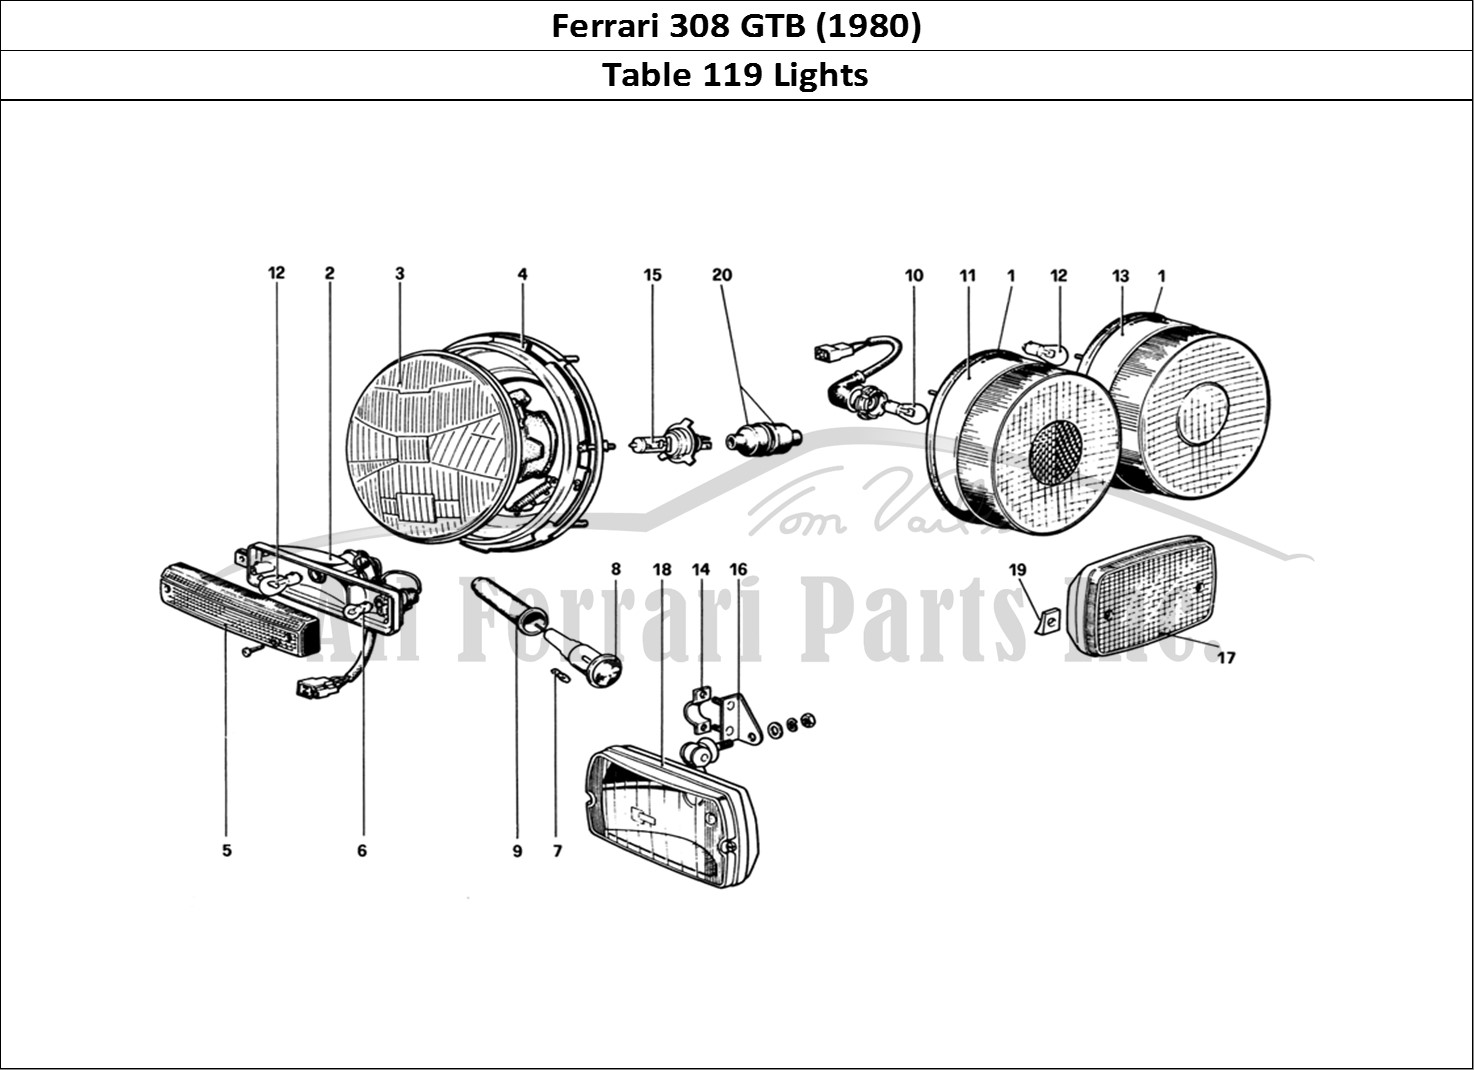 Ferrari Parts Ferrari 308 GTB (1980) Page 119 Lights